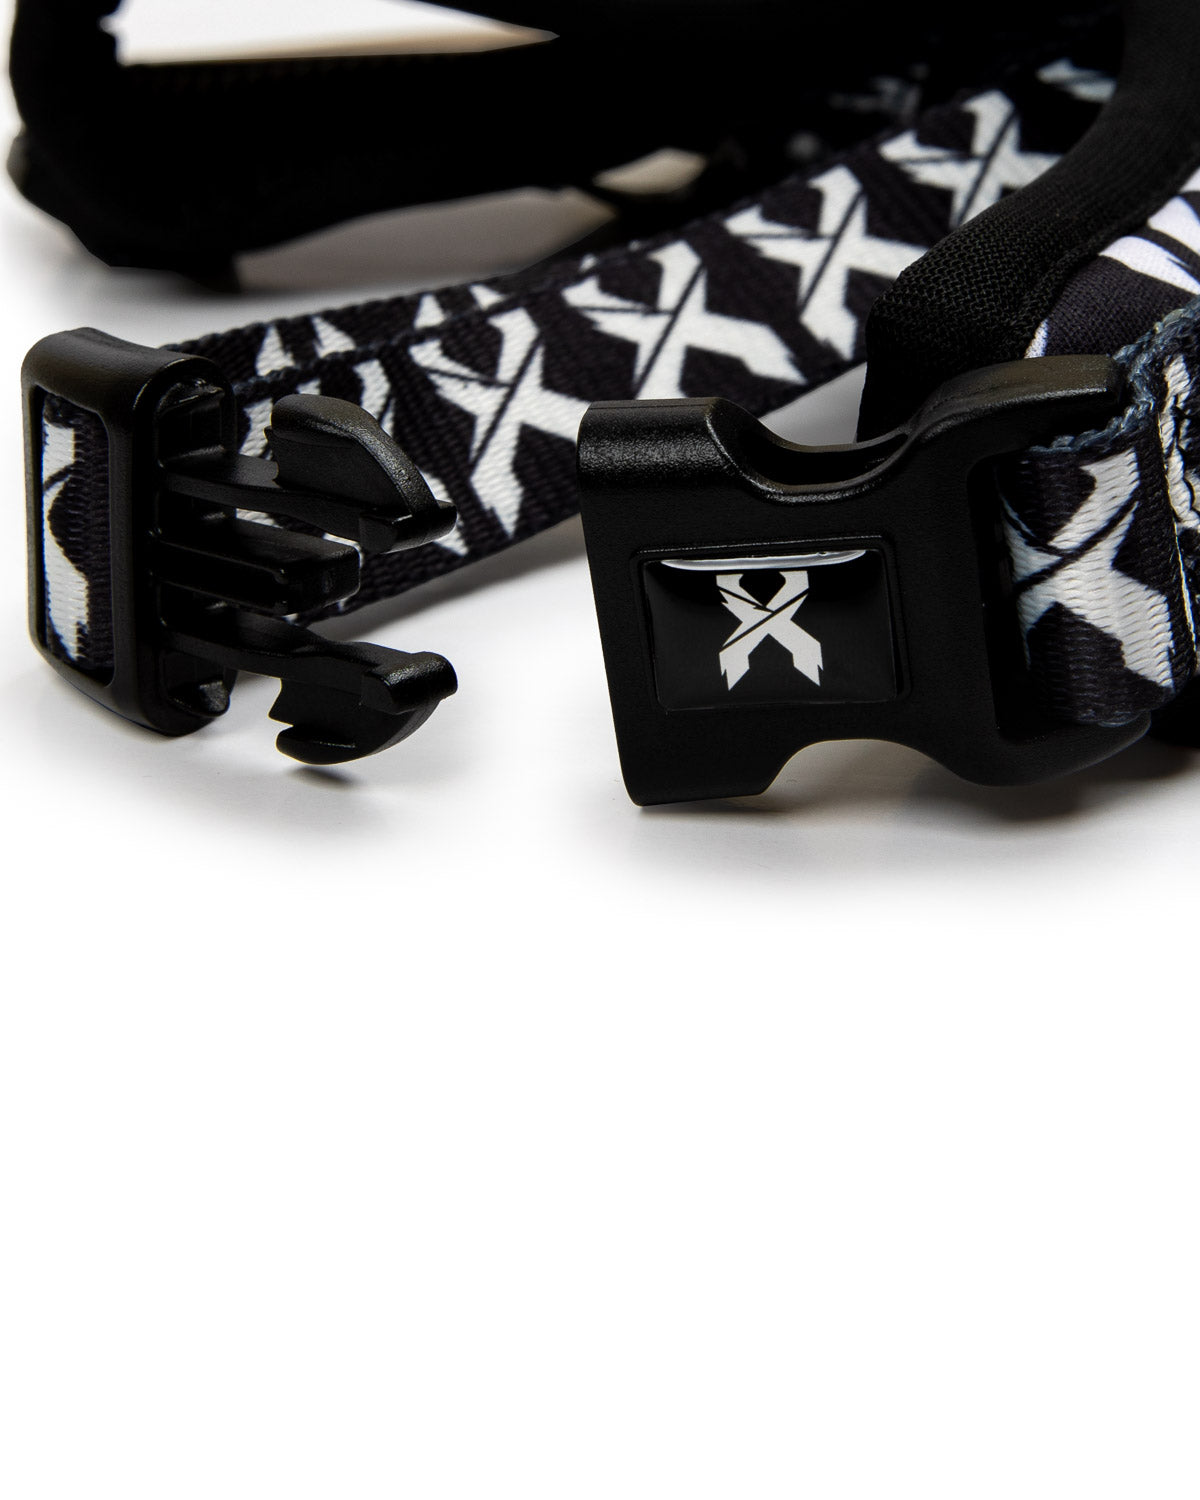 Rex Dog Harness (Black/White)